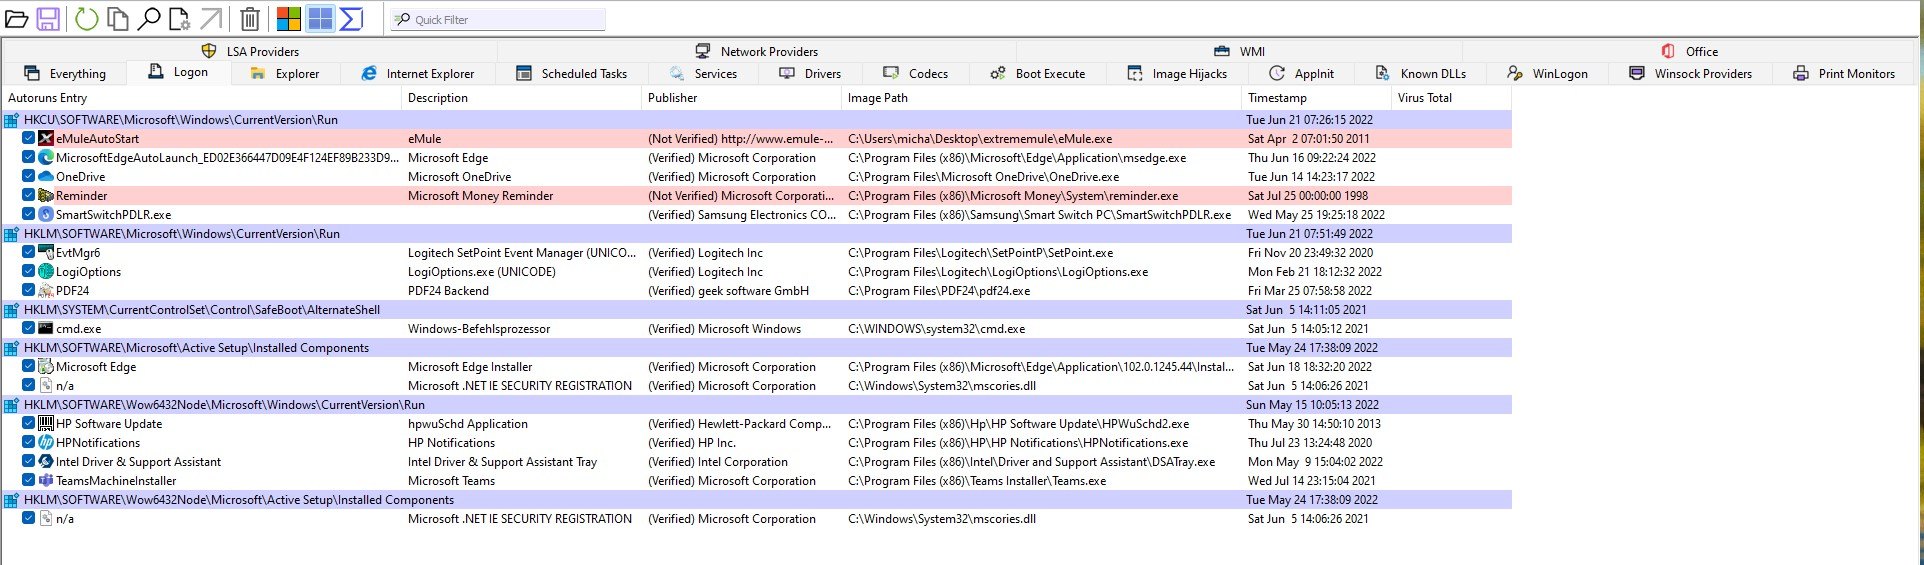 Microsoft Store  Aktuallisierungs fehler Code: 0x80070005